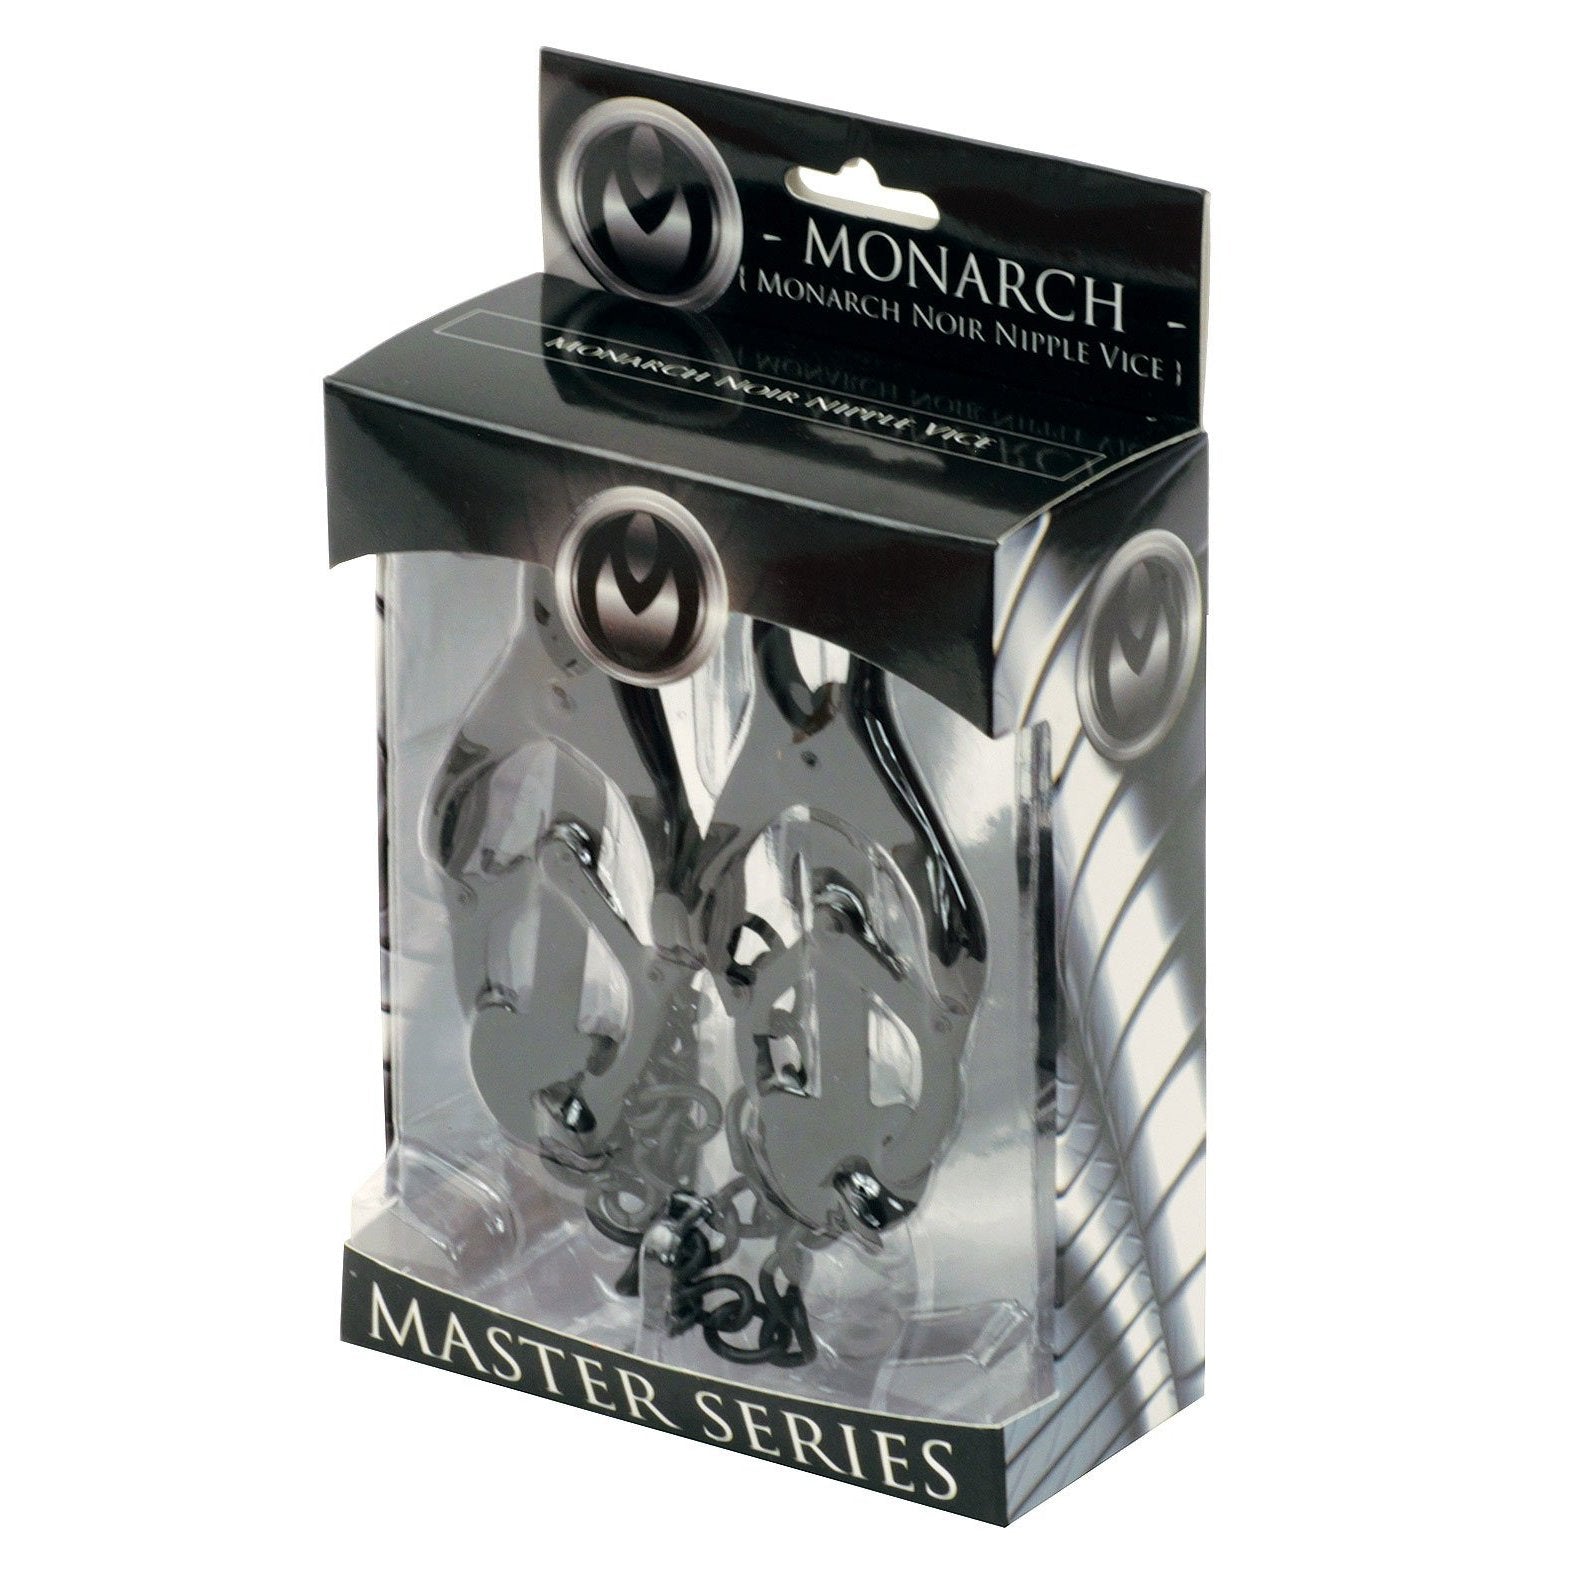 Monarch Noir Nipple Vice by Master Series